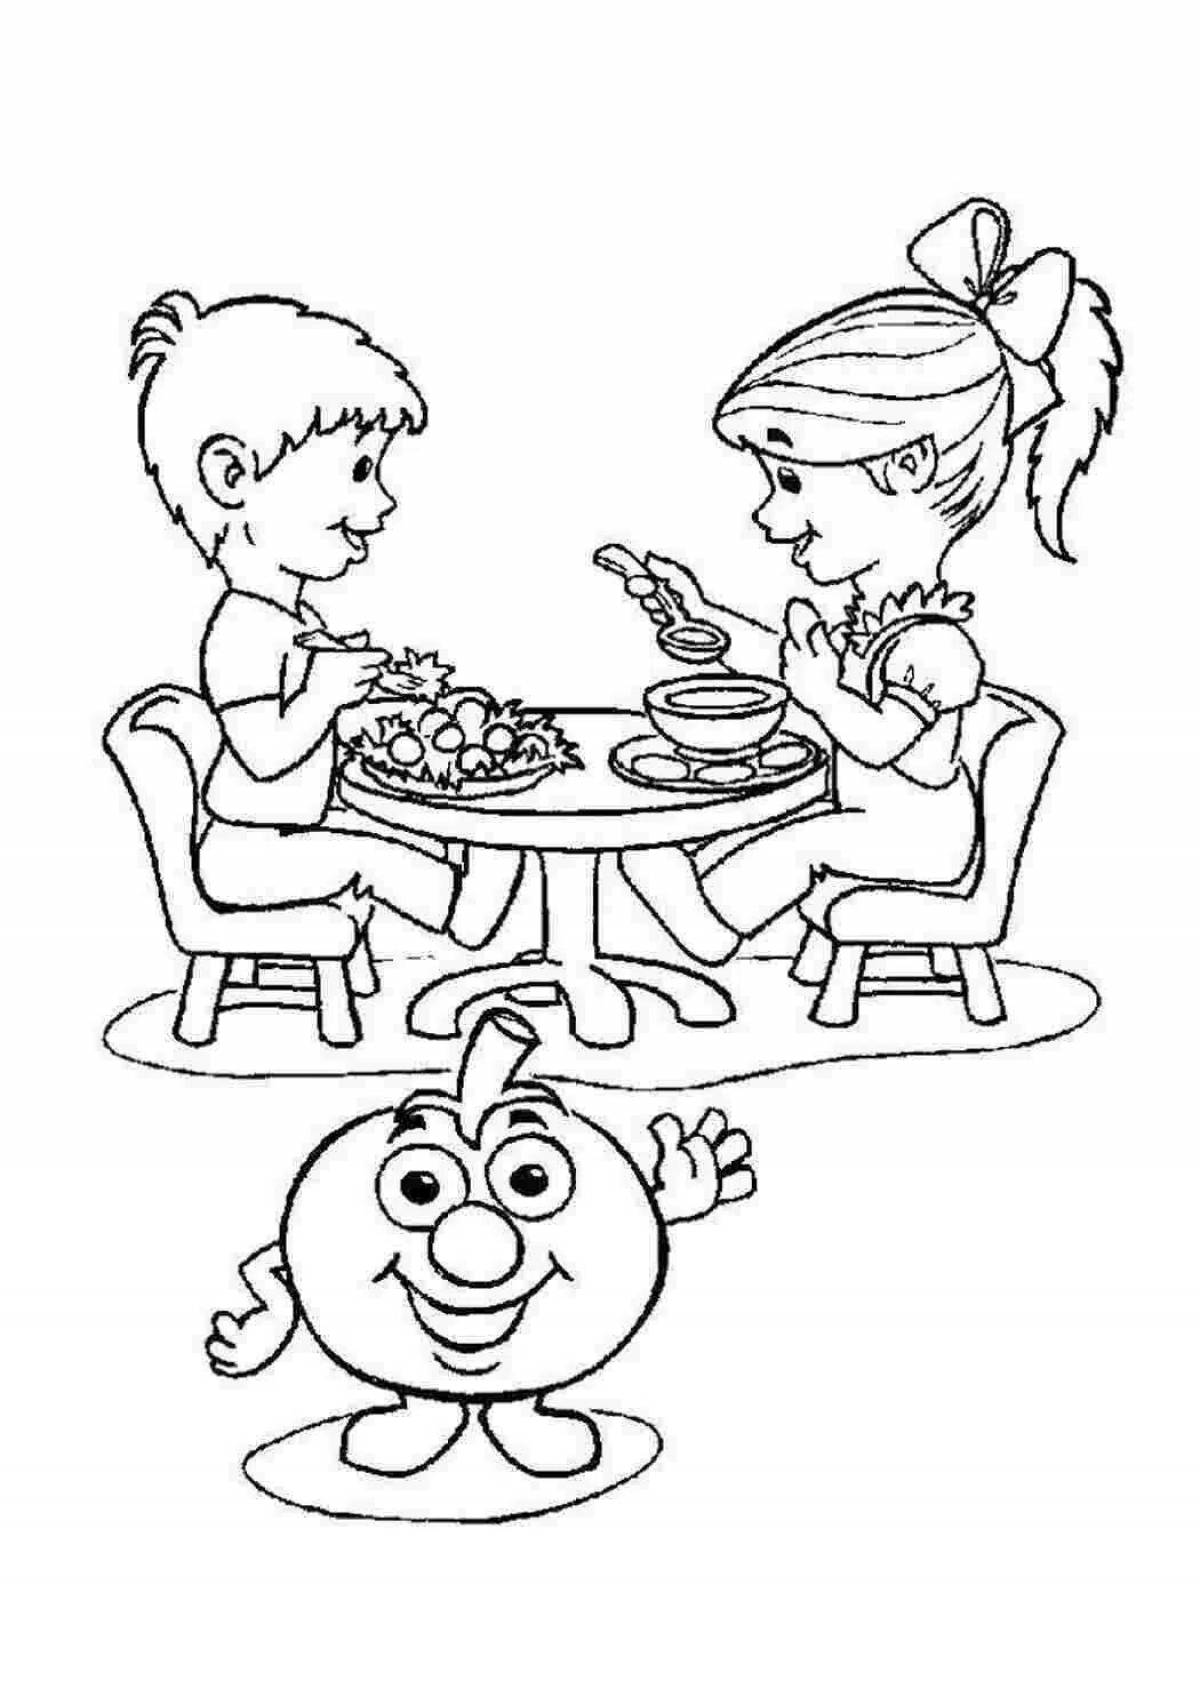 Fun etiquette coloring book for kindergarten